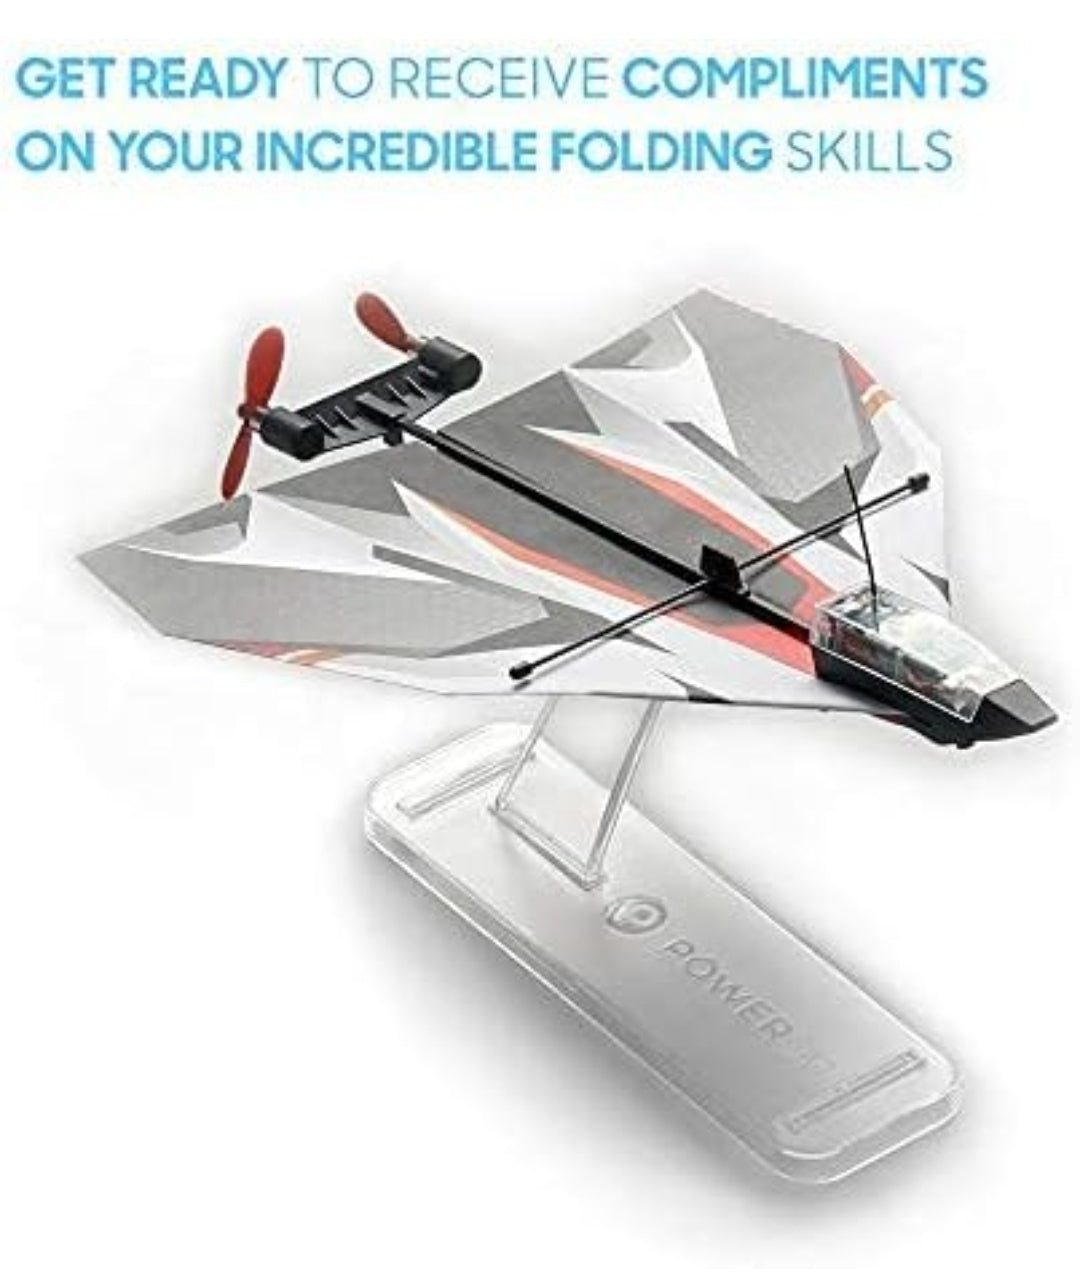 NIB *Paper Plane Templates &     Paper for PowerUp 4.0 Paper Air Plane Kits [Many Designs]